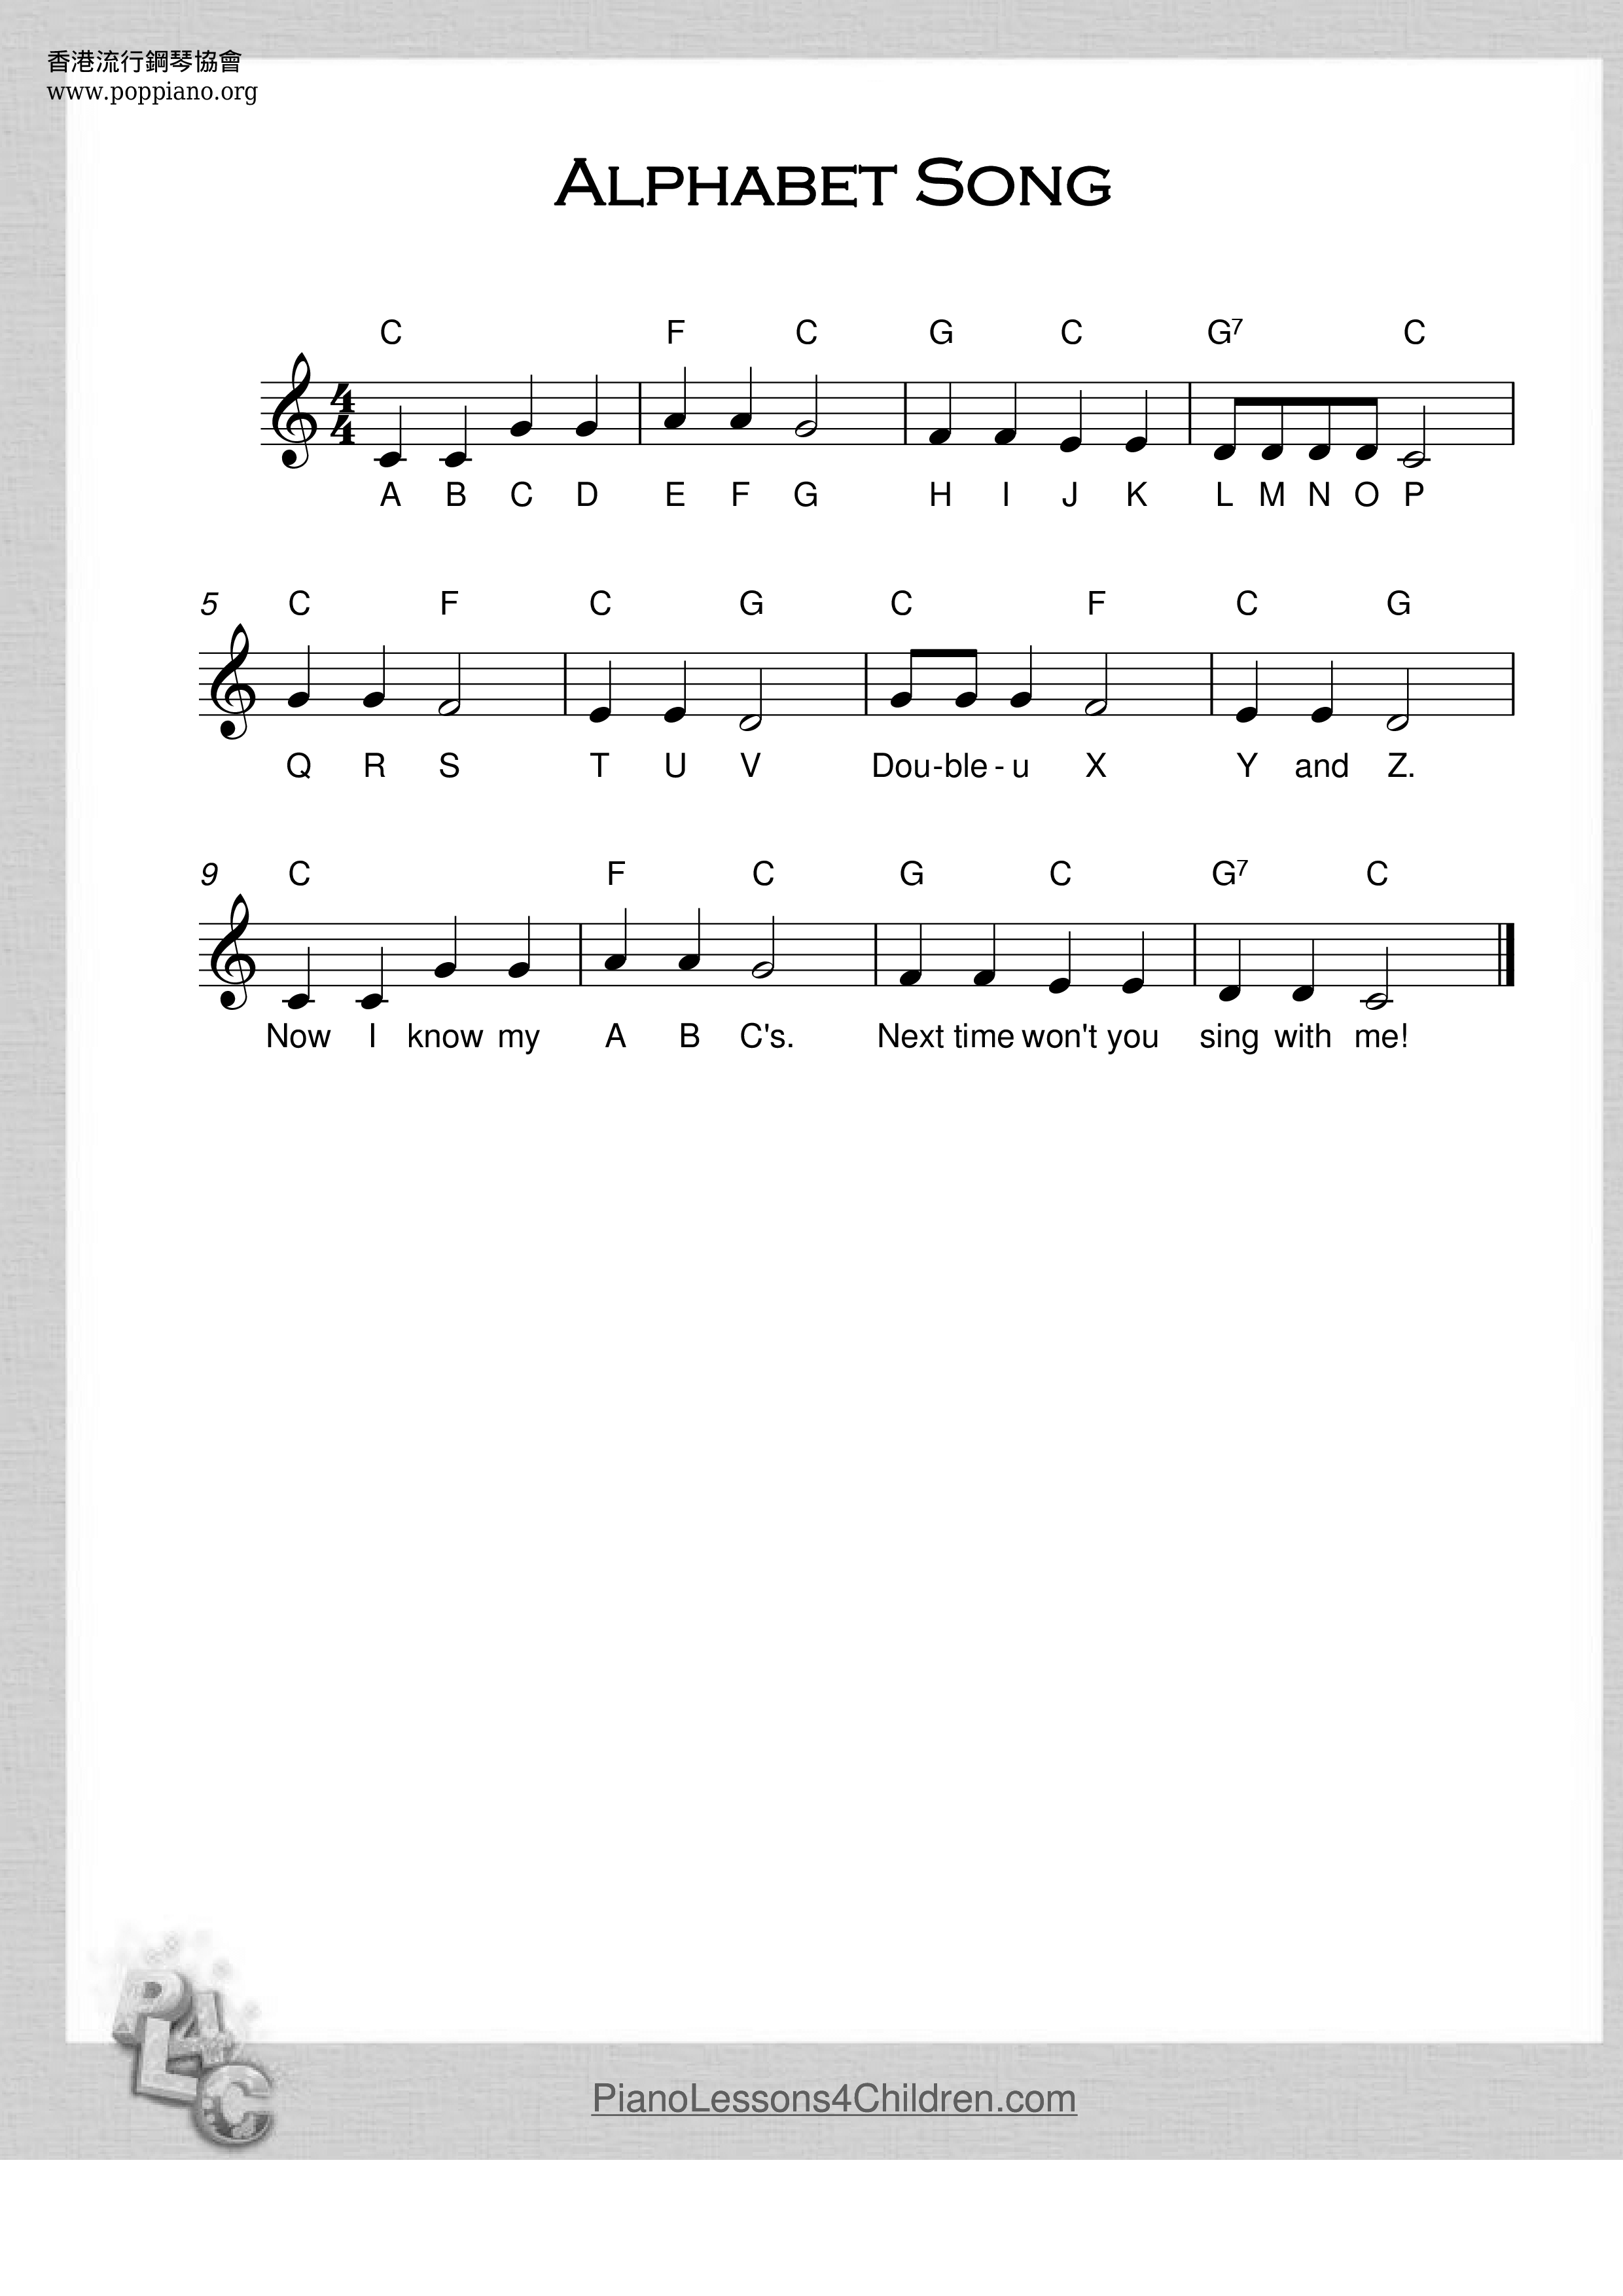 Alphabet Song Score